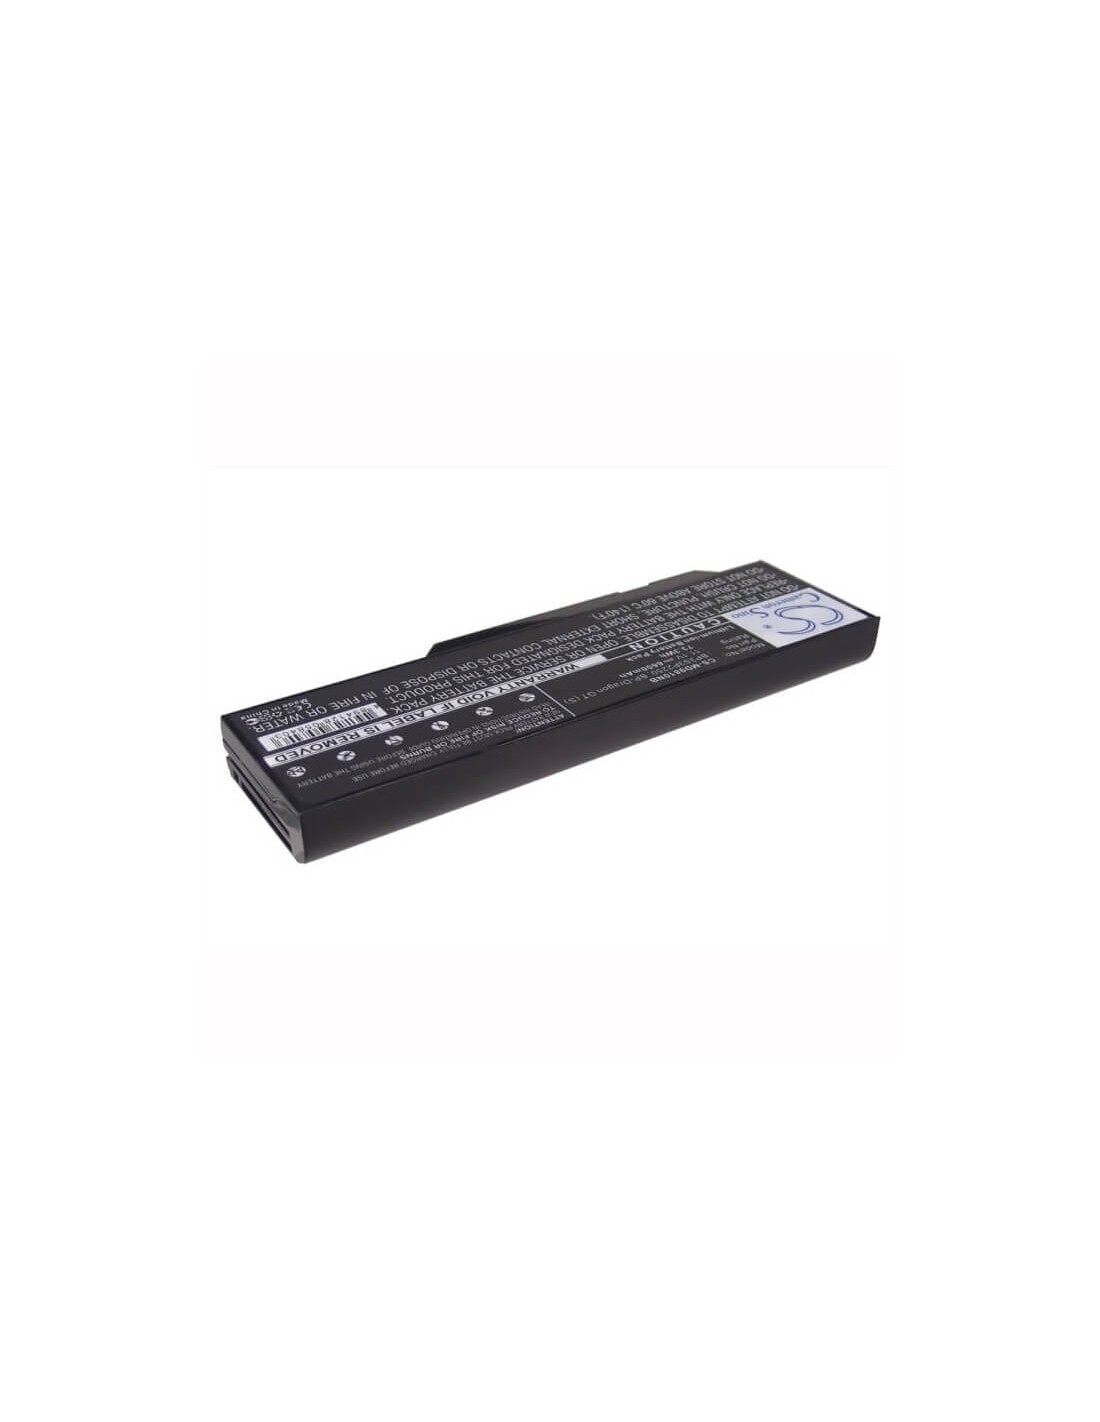 Black Battery for Medion Mim2070, Mim2240, Mim2270 11.1V, 6600mAh - 73.26Wh